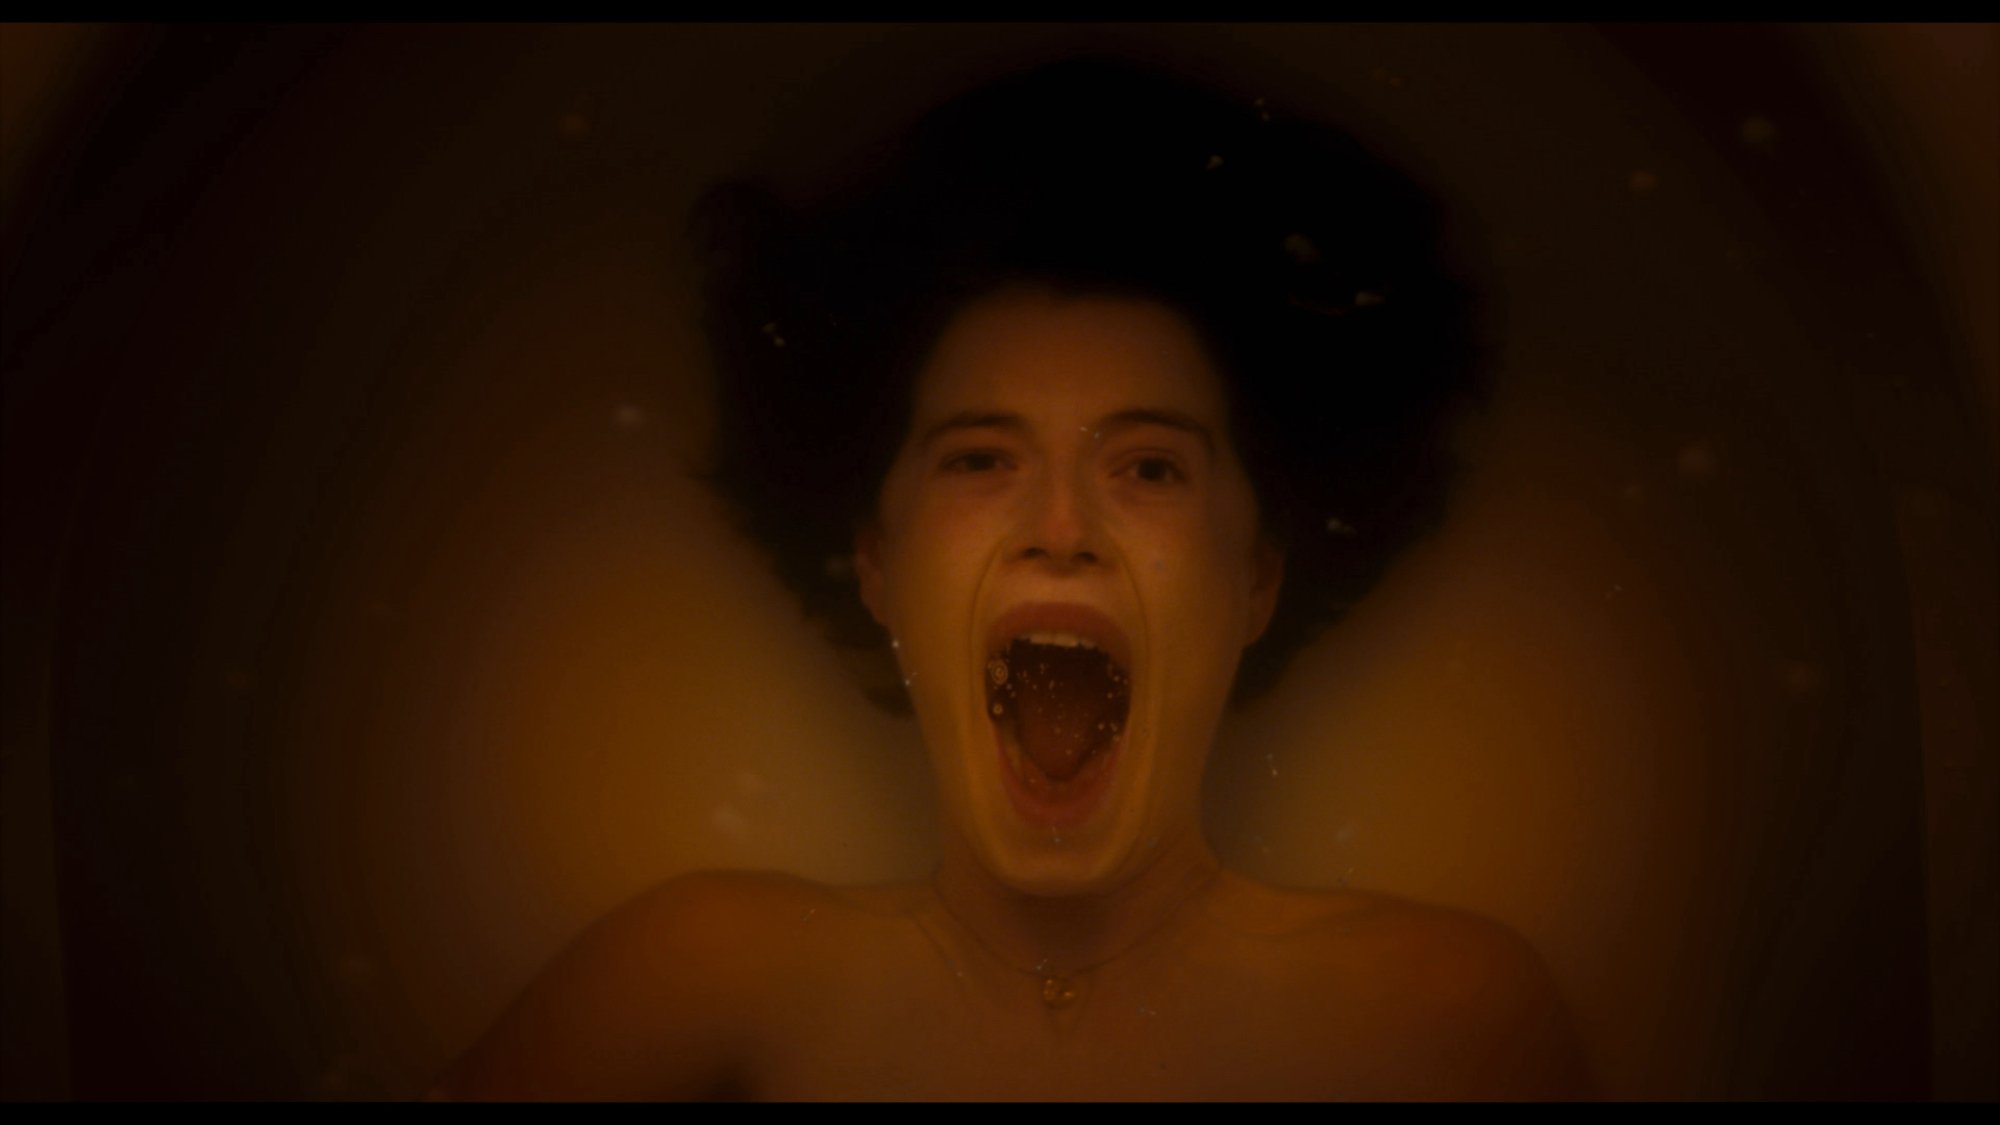 'Men' Jessie Buckley as Harper screaming underneath the water in a bathtub